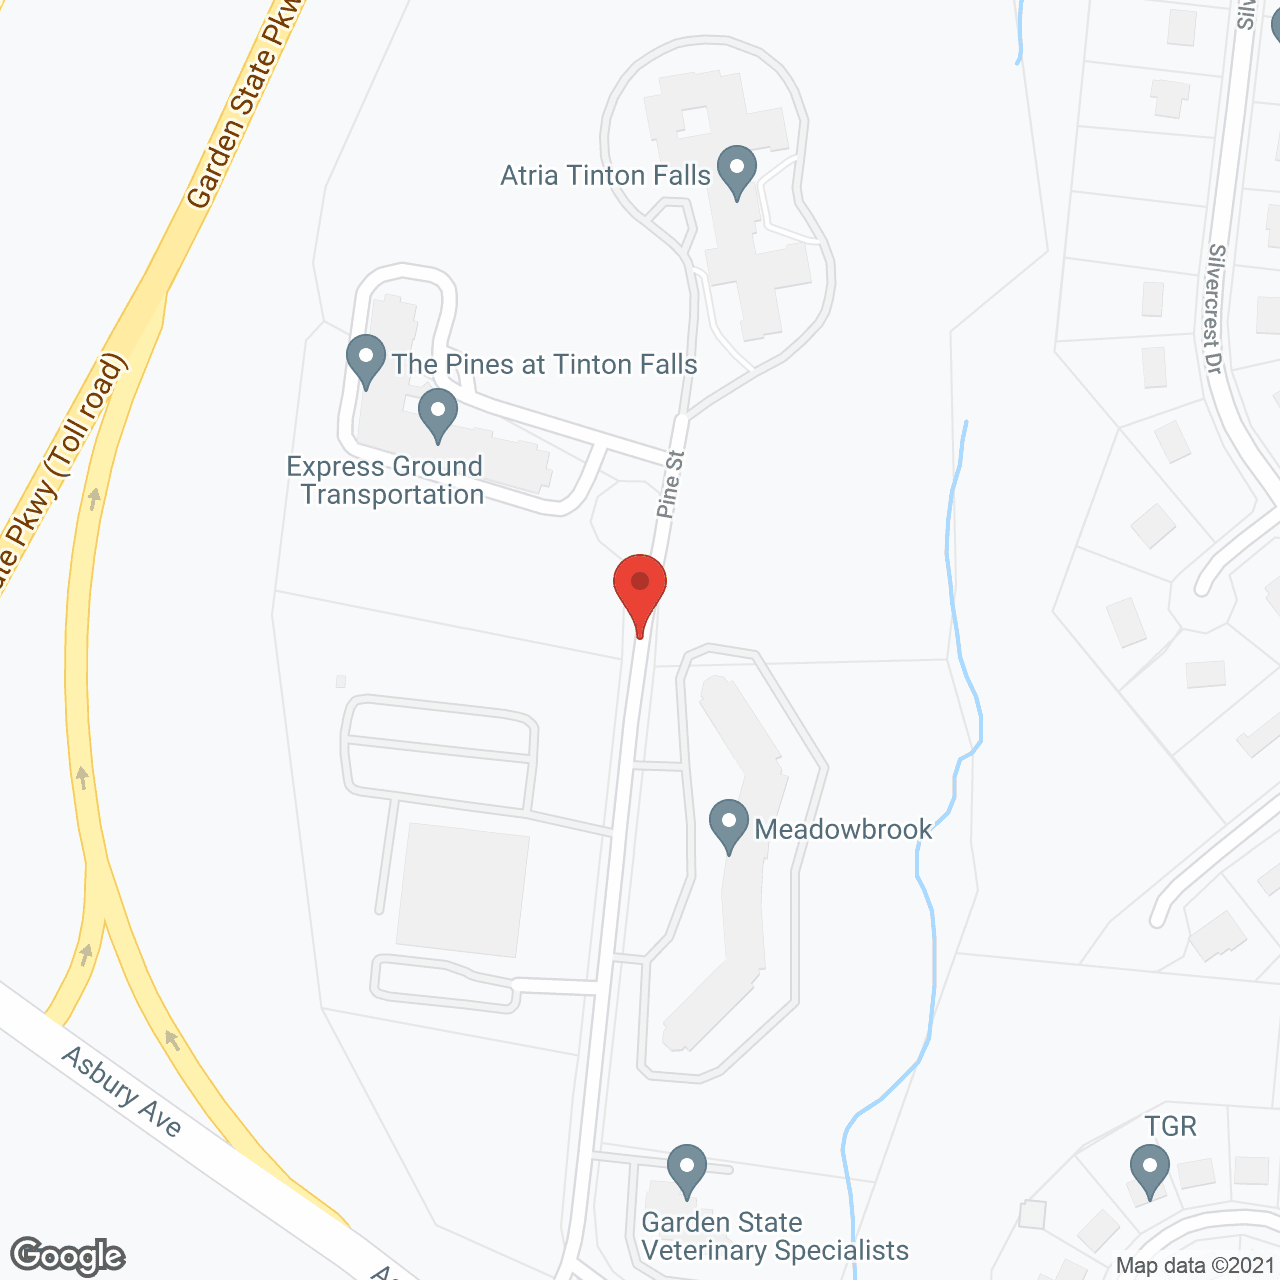 Atria Tinton Falls in google map